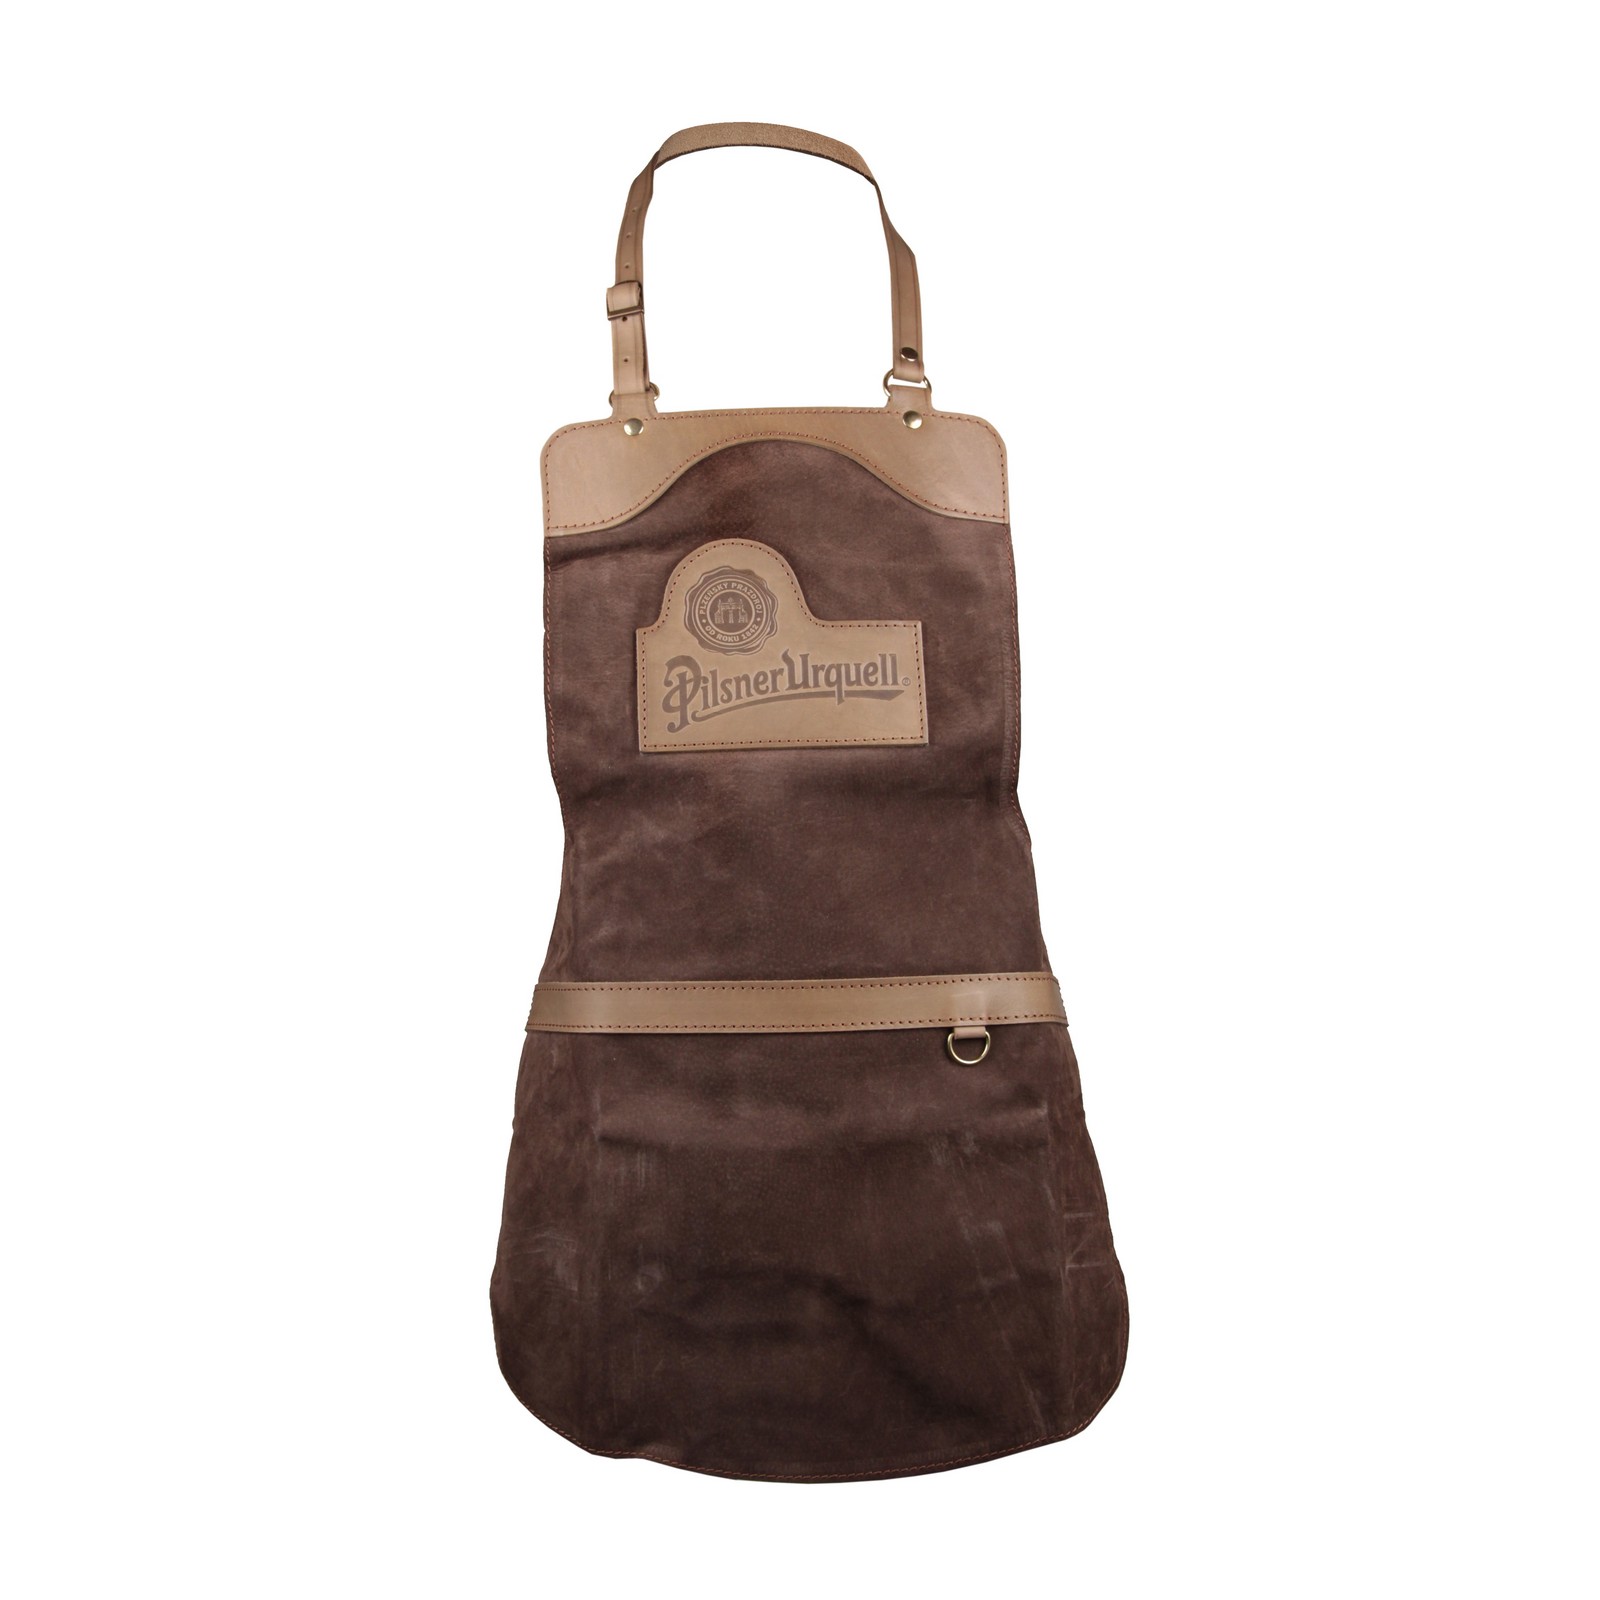 Pilsner Urquell apron - leather